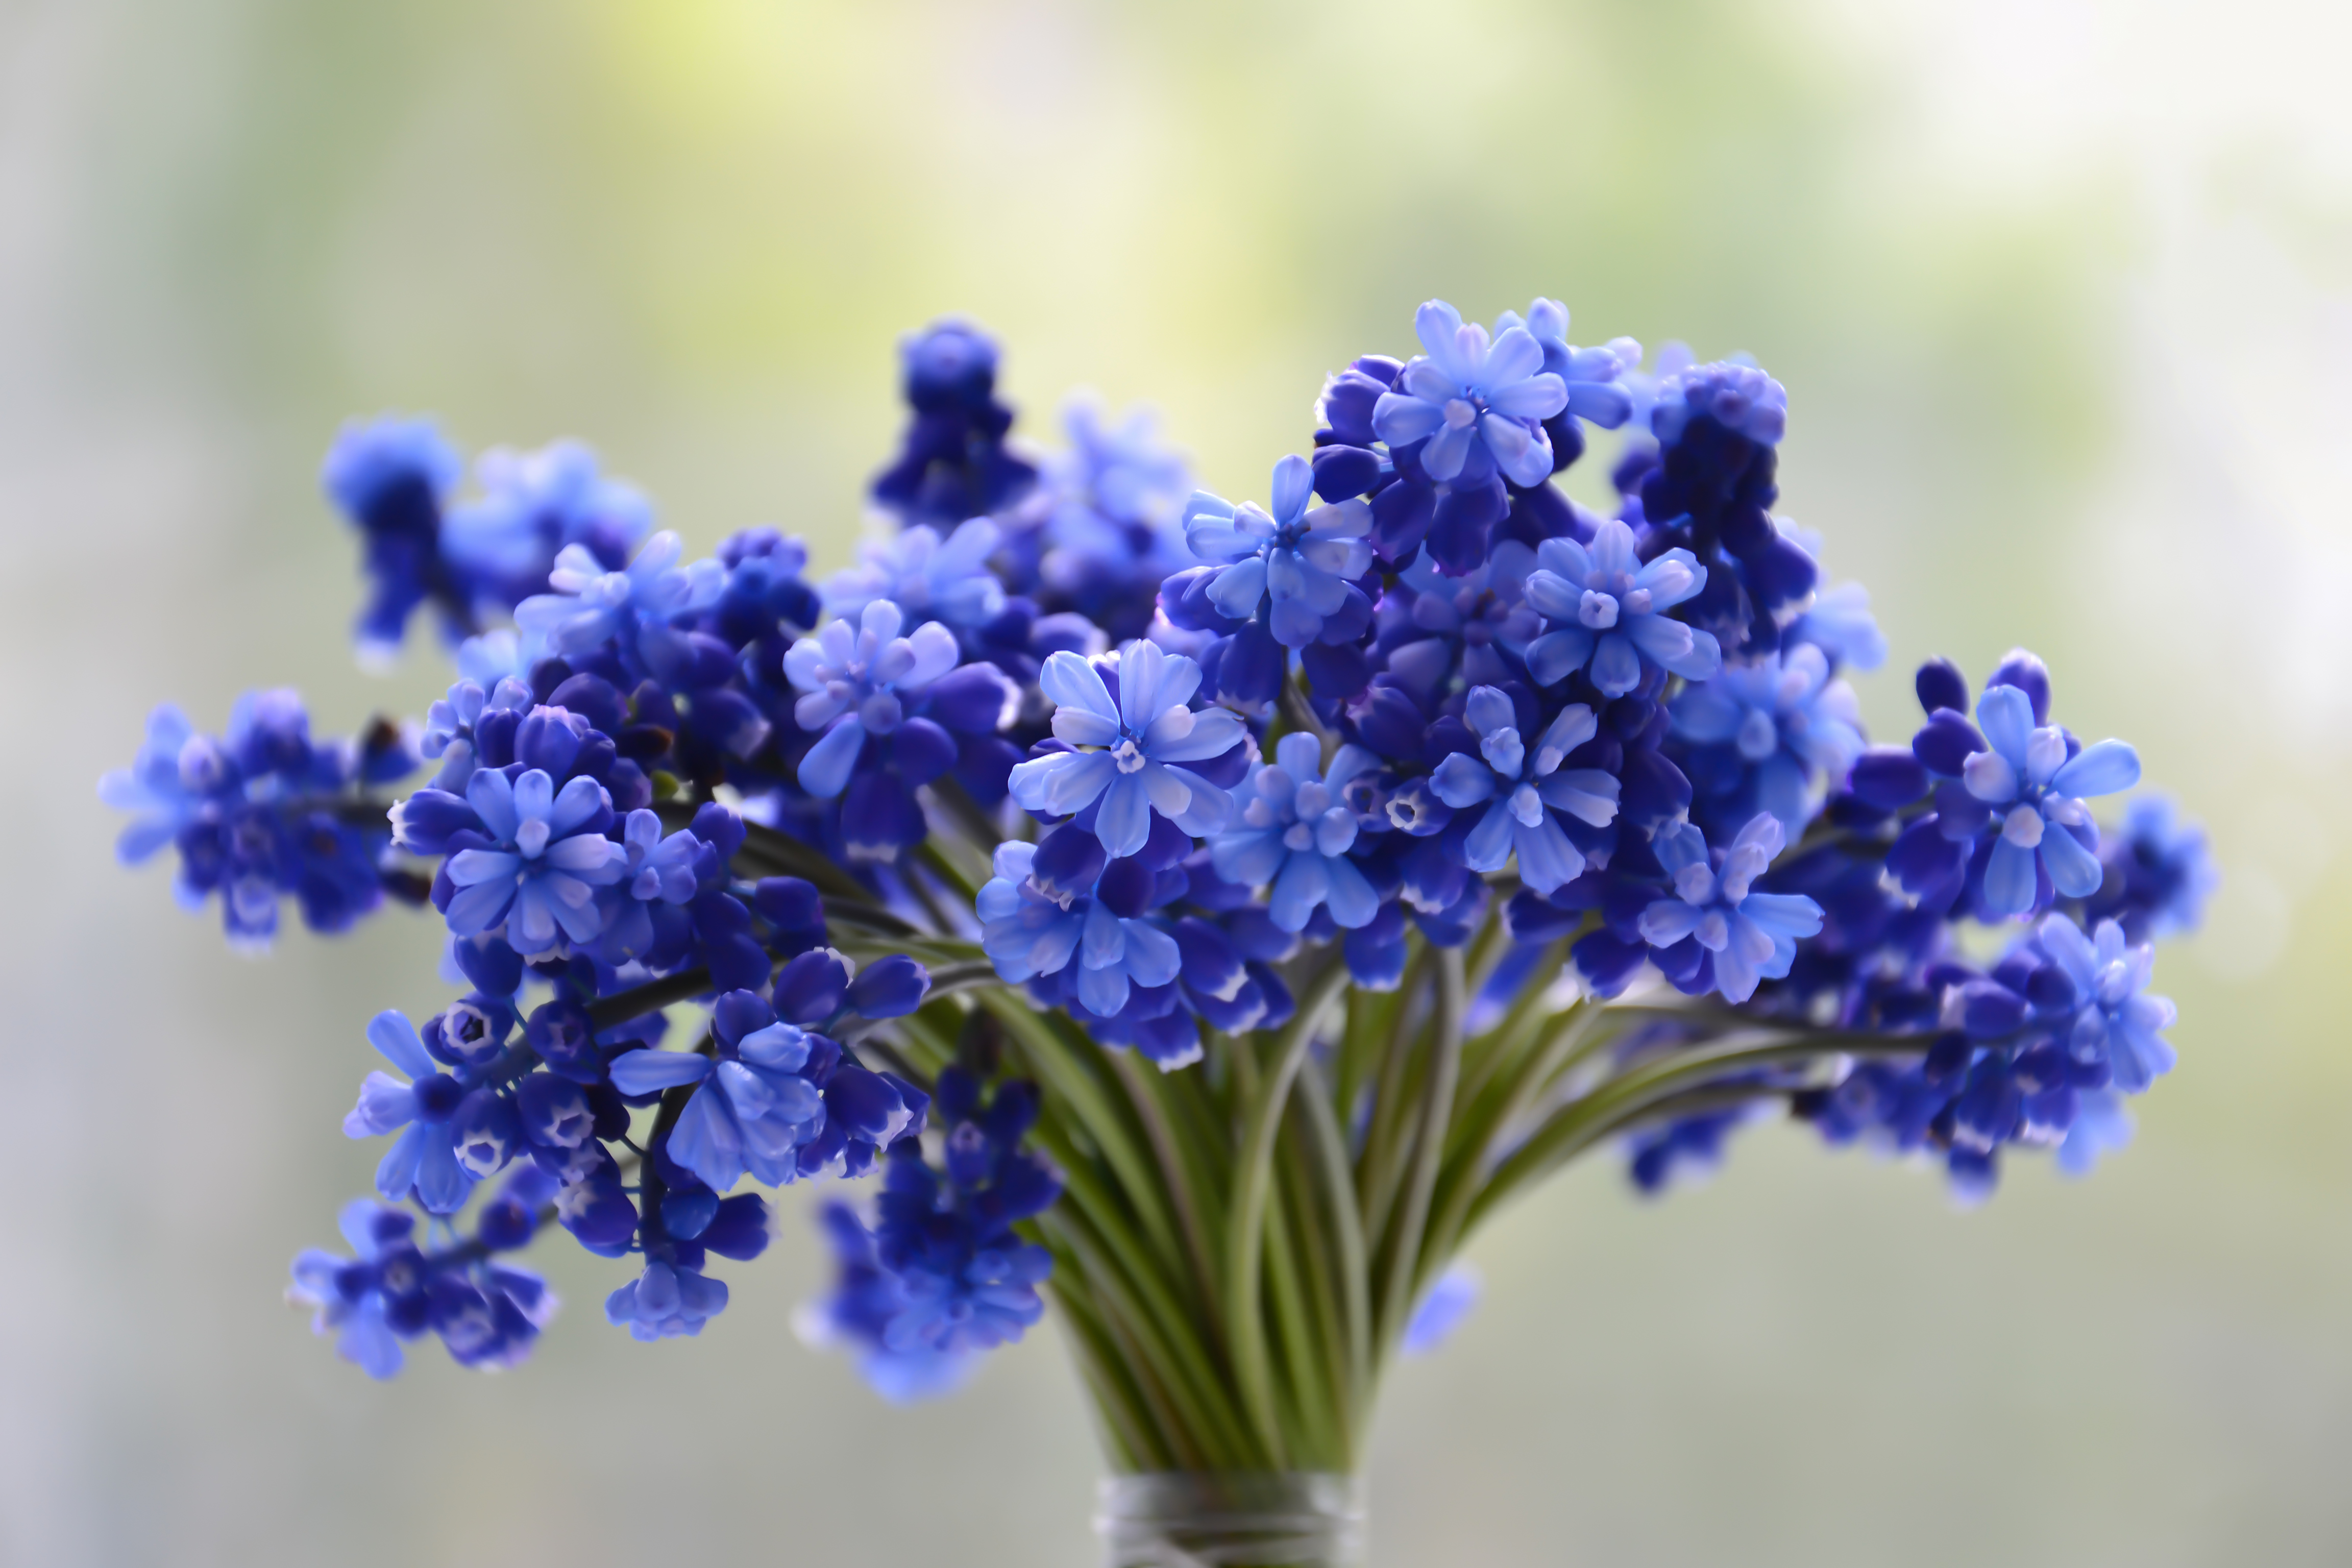 A bouquet of blue flowers